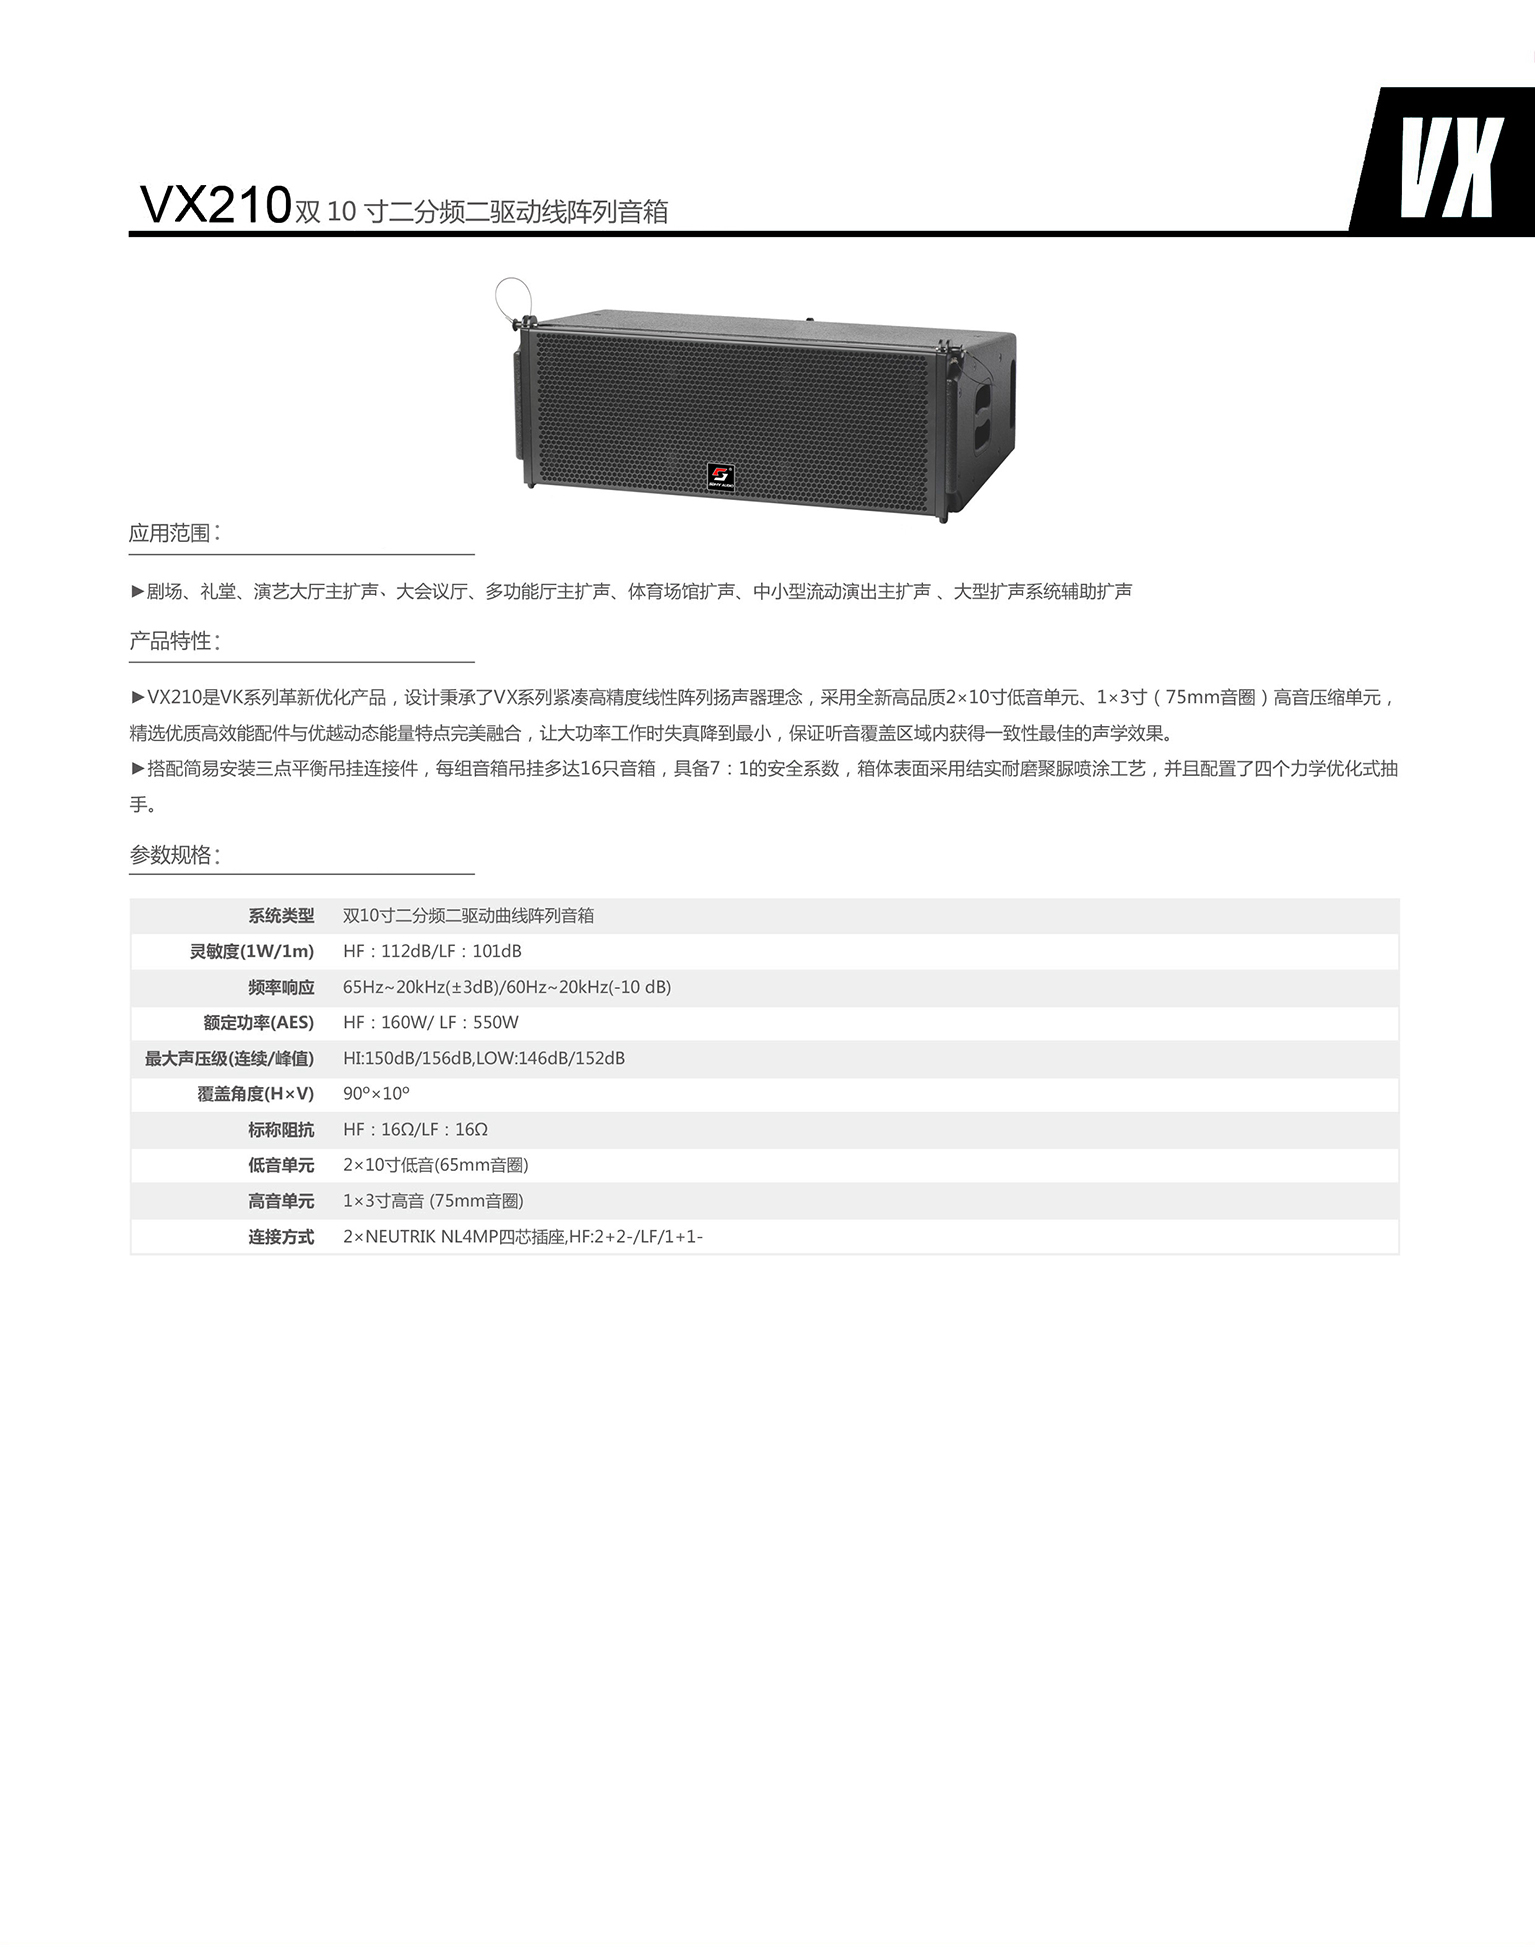 VX210 双10寸二分频二驱动线阵列音箱.jpg